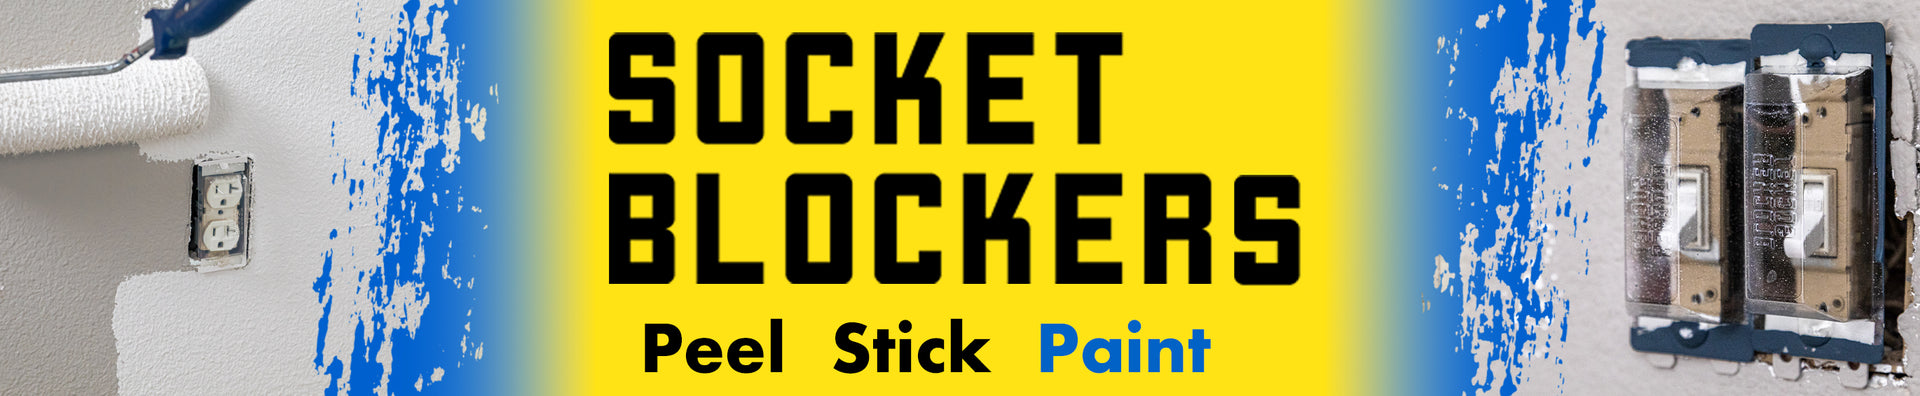 Socket Blockers, masking tools for professional painters